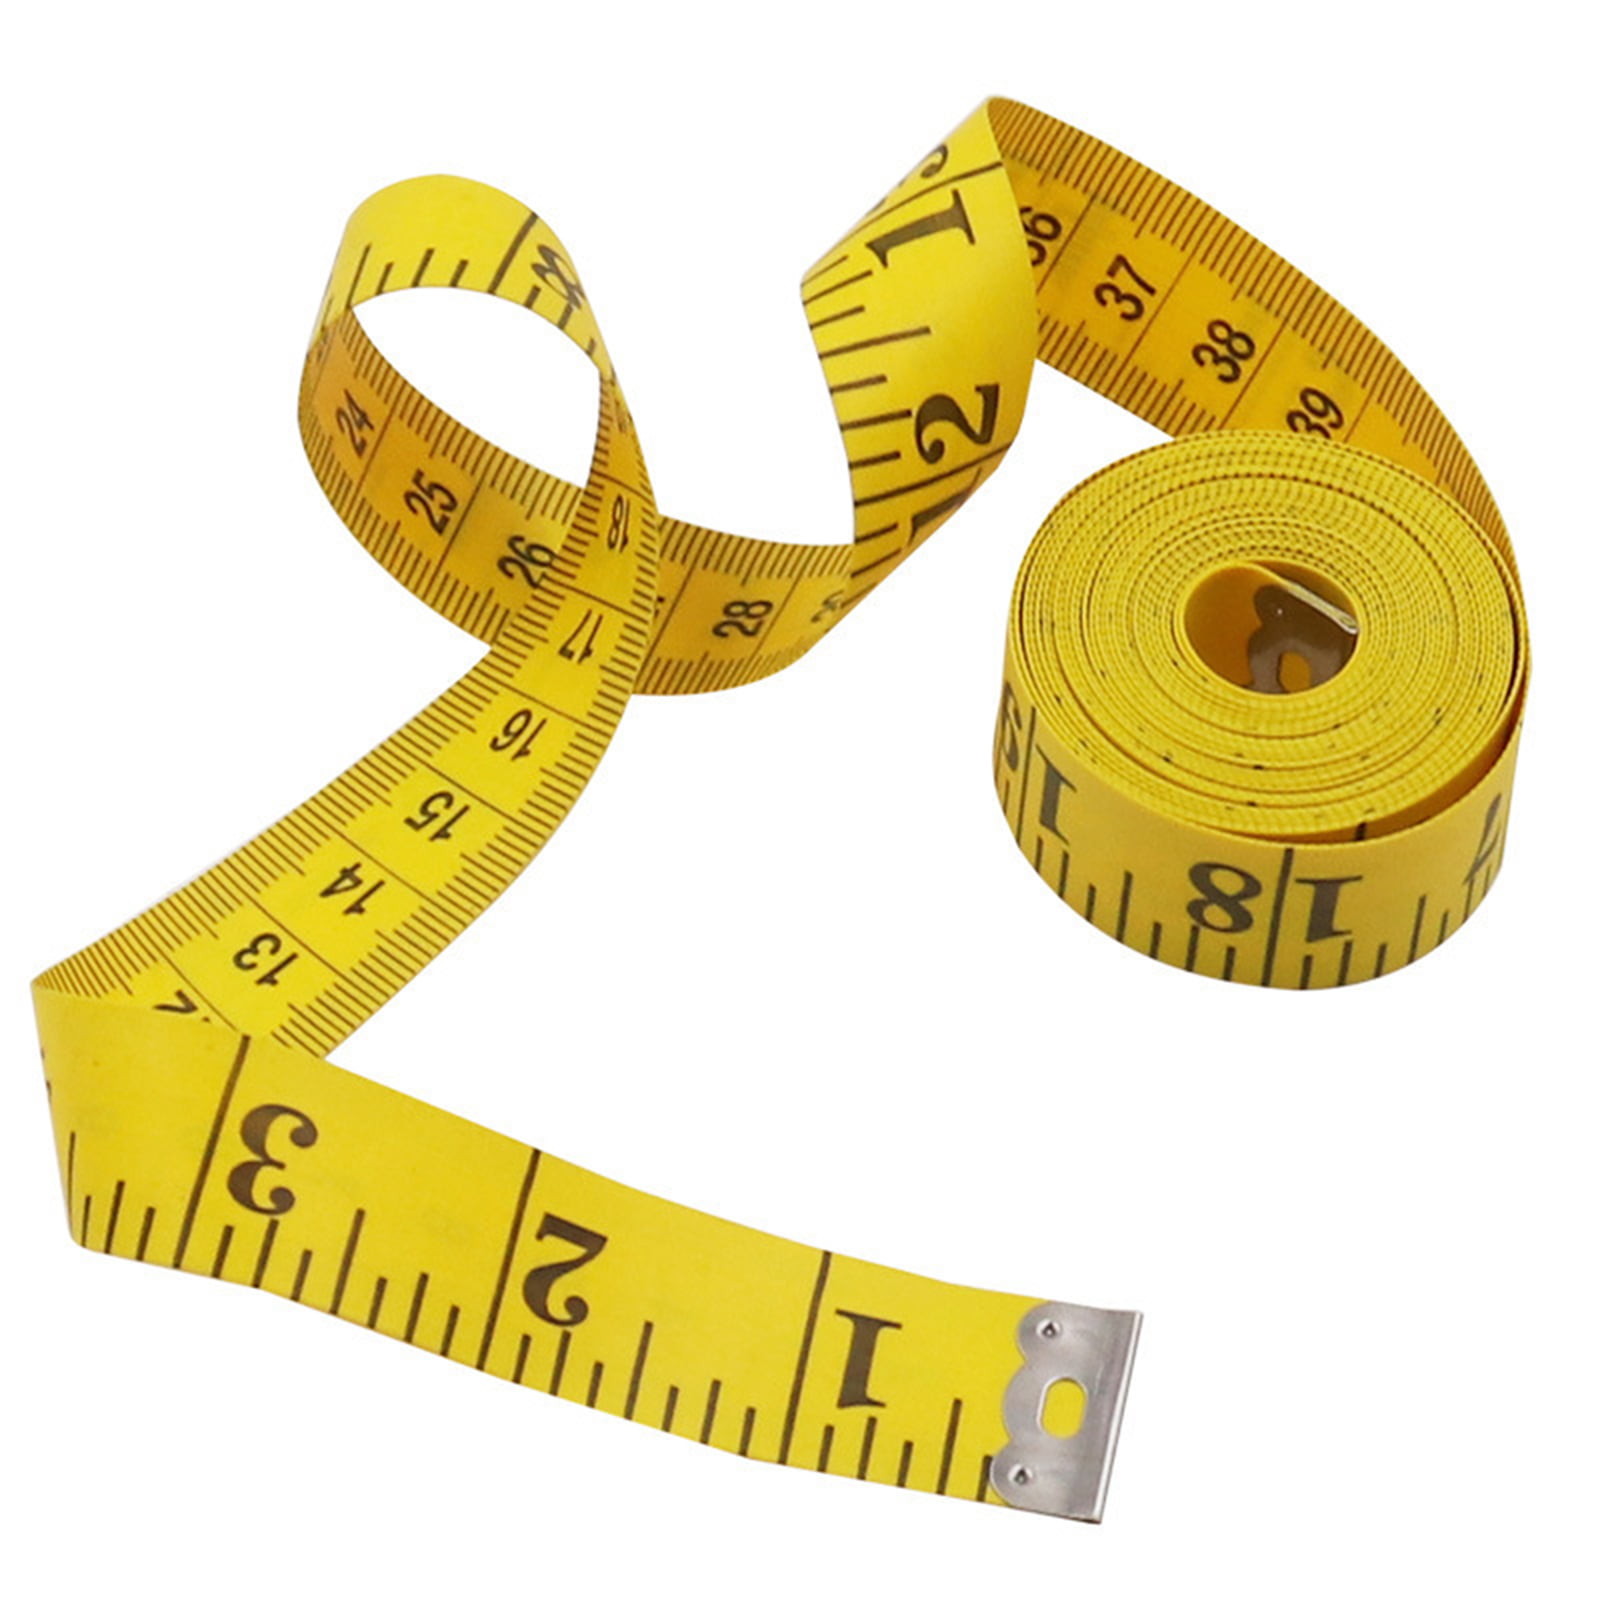 Soft 3meter 300cm Sewing Tailor Tape Body Measuring Measure Ruler DRESSMAKI  Zh6 for sale online